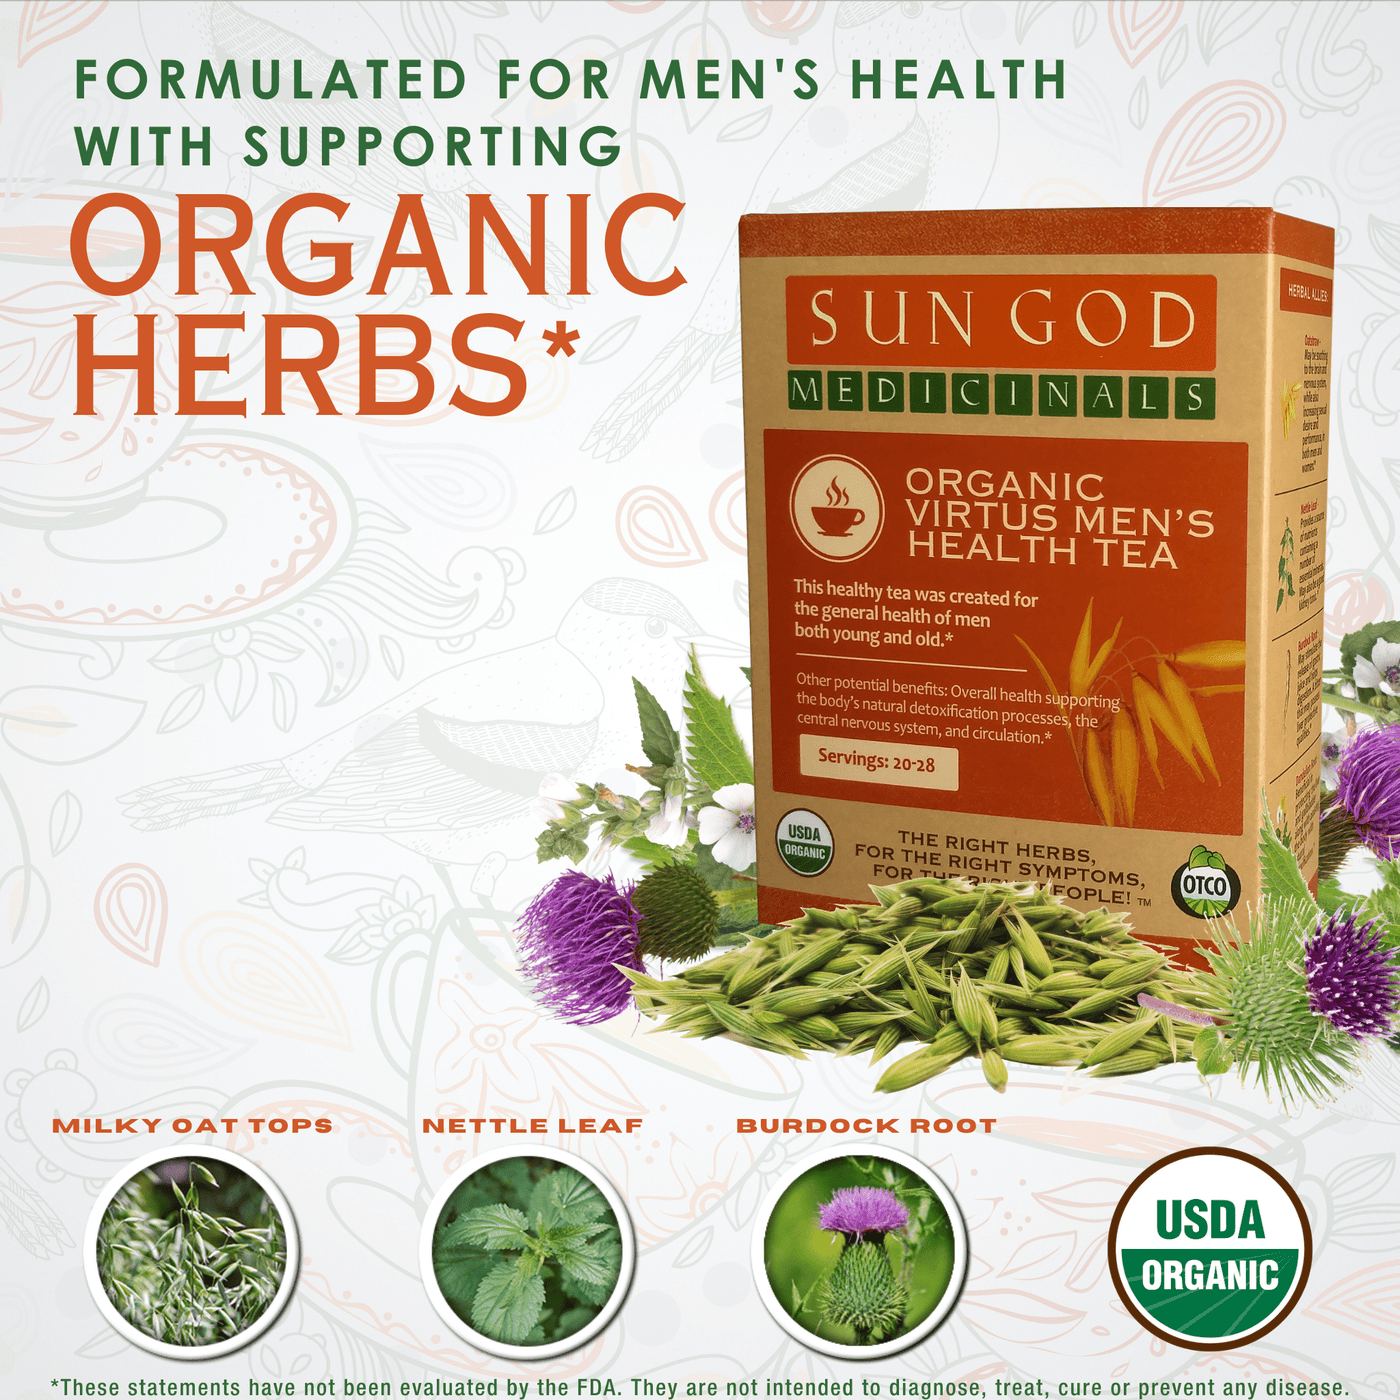 Virtus Men's Health Organic Herbal Tea - Sun God Medicinals